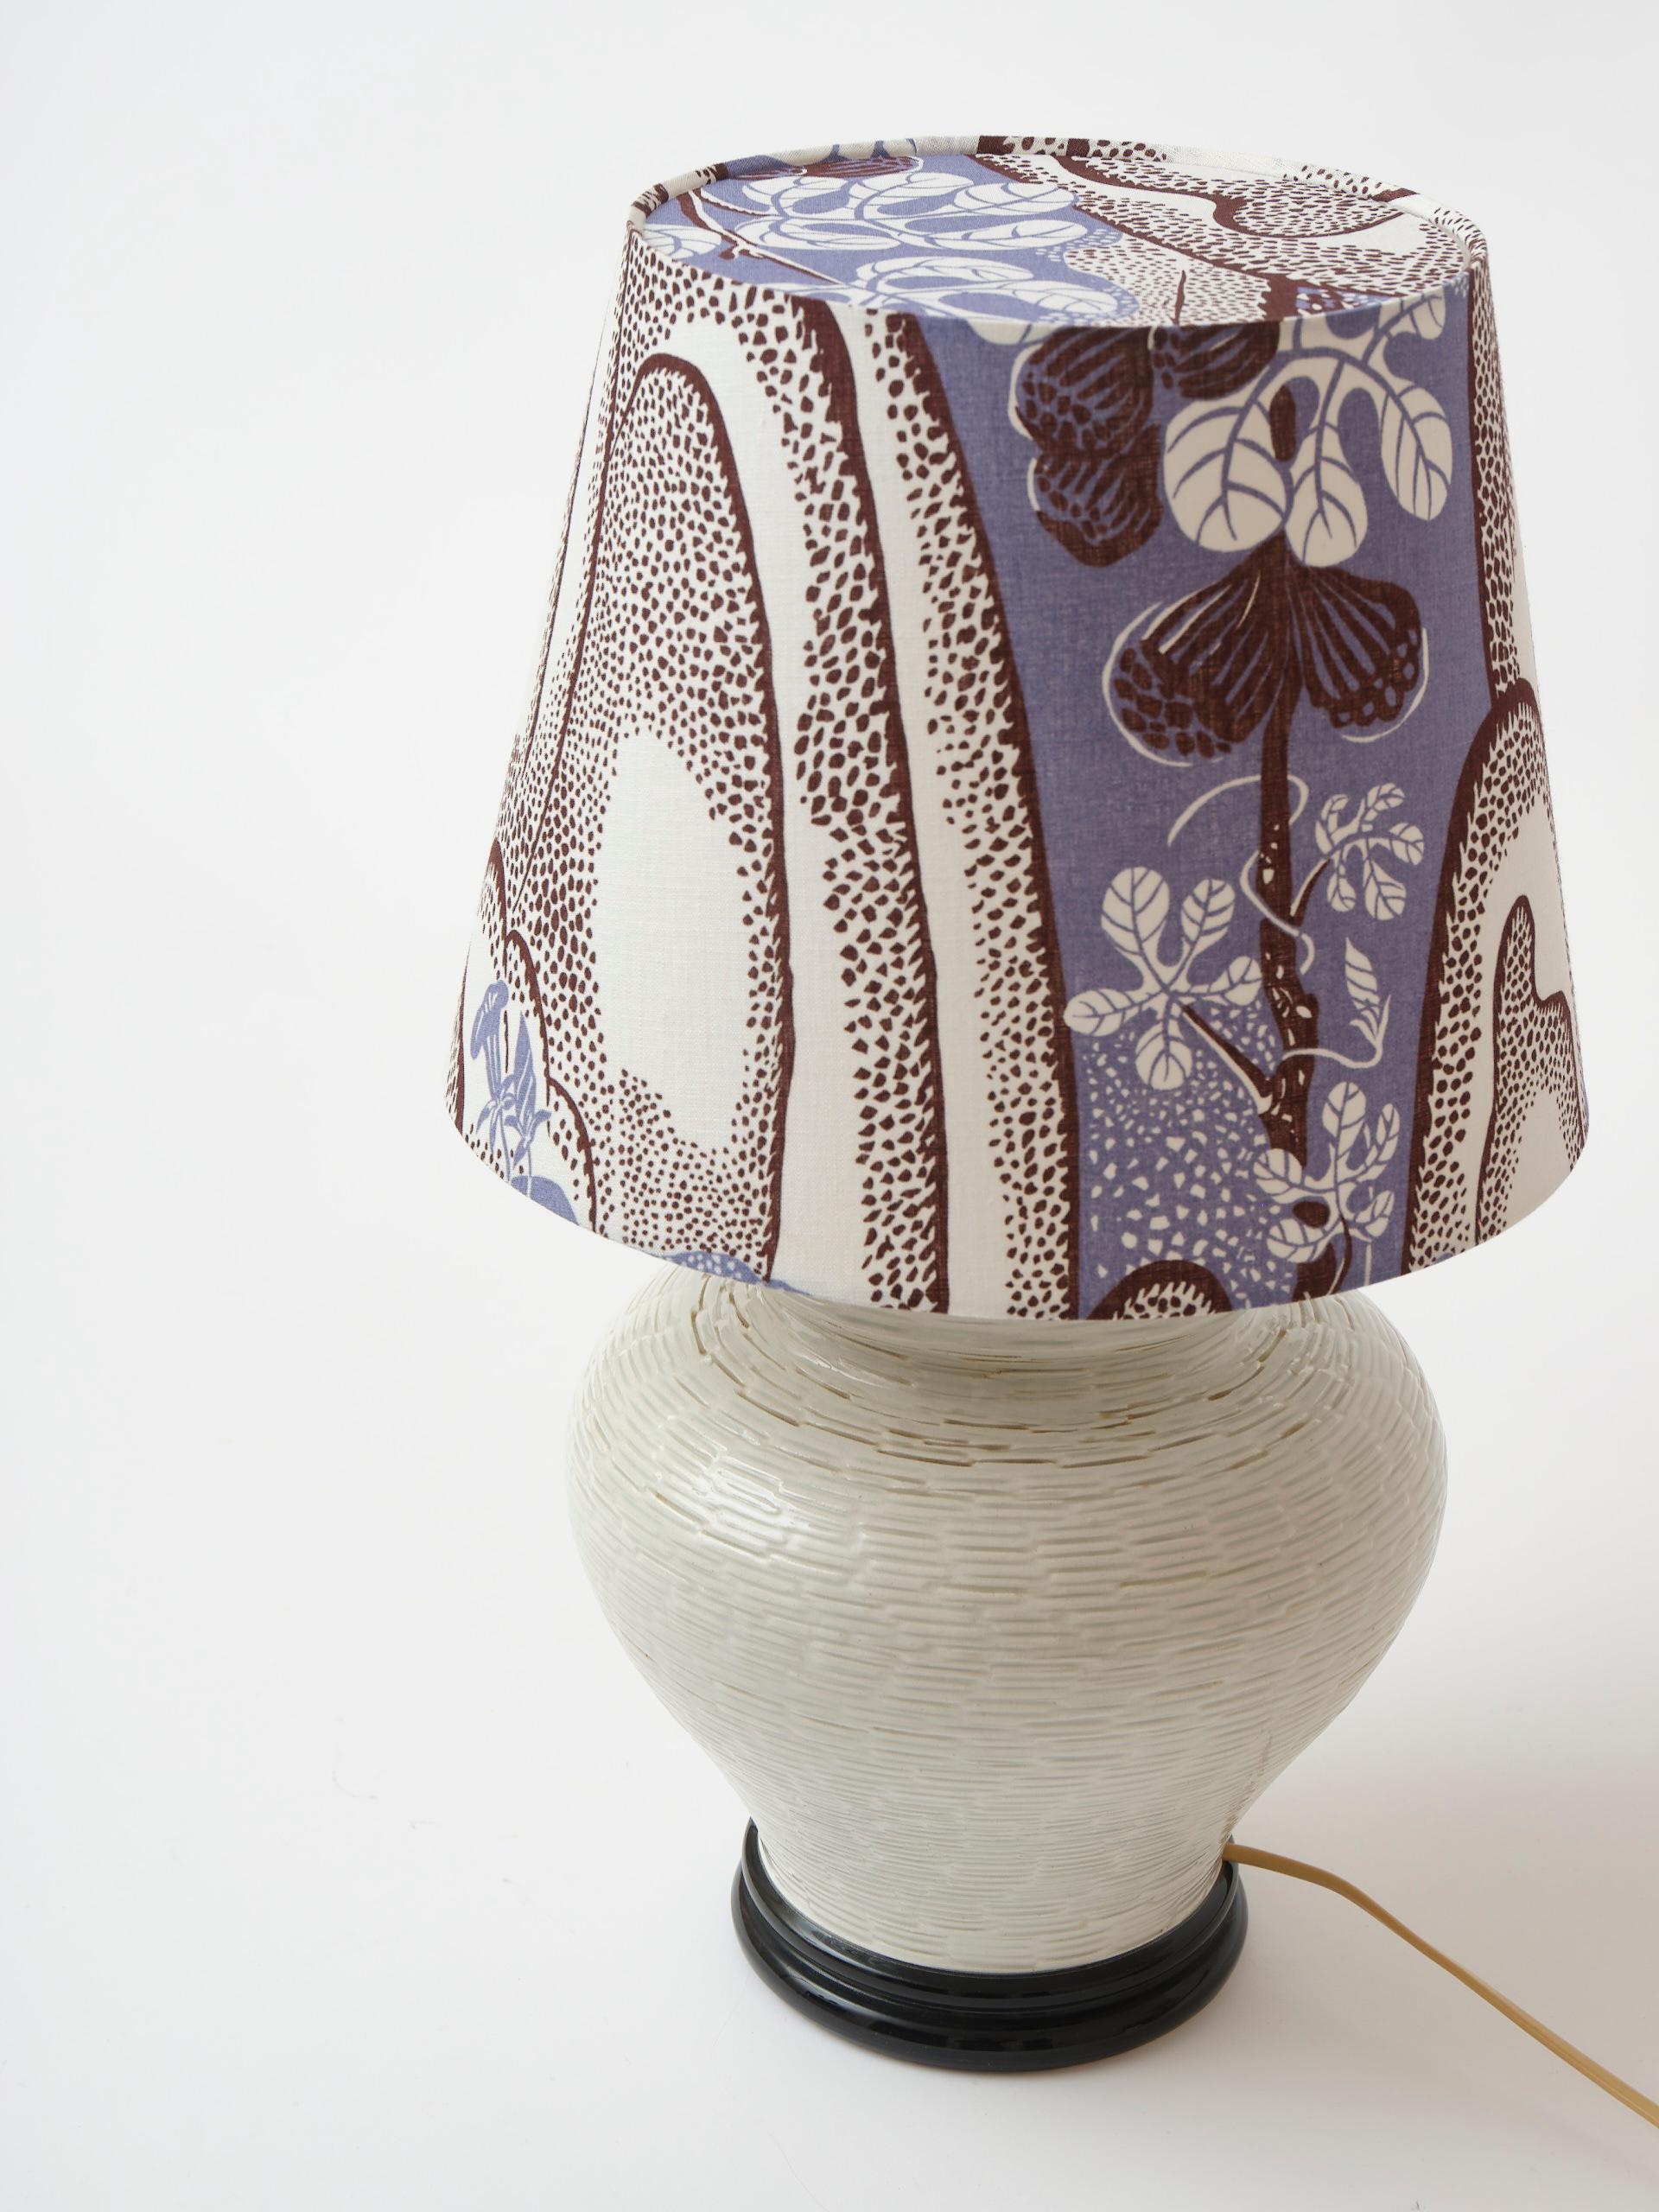 Vintage handmade Italian ceramic table lamp shade in vintage Josef Frank textile For Sale 2